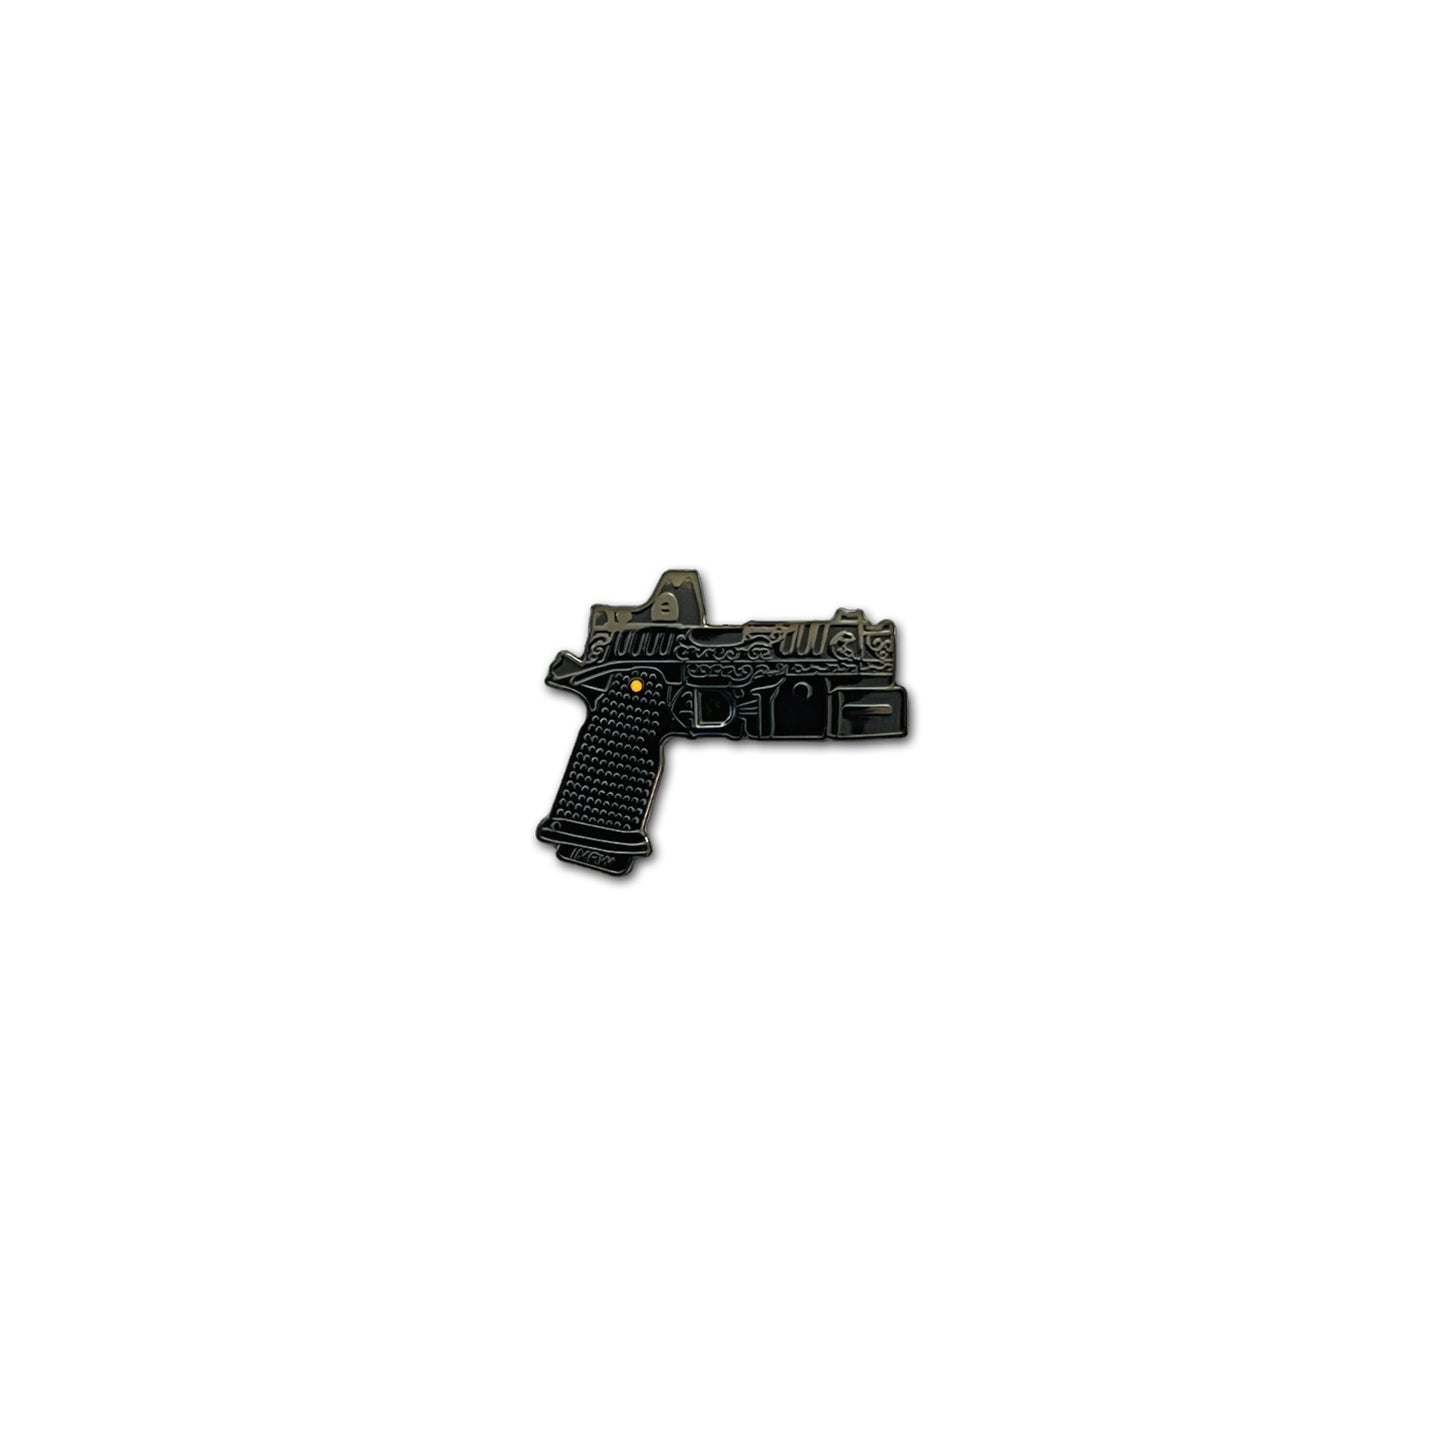 Limited Edition 2011 x Iron Monkey Rifle Works Custom Enamel Pin